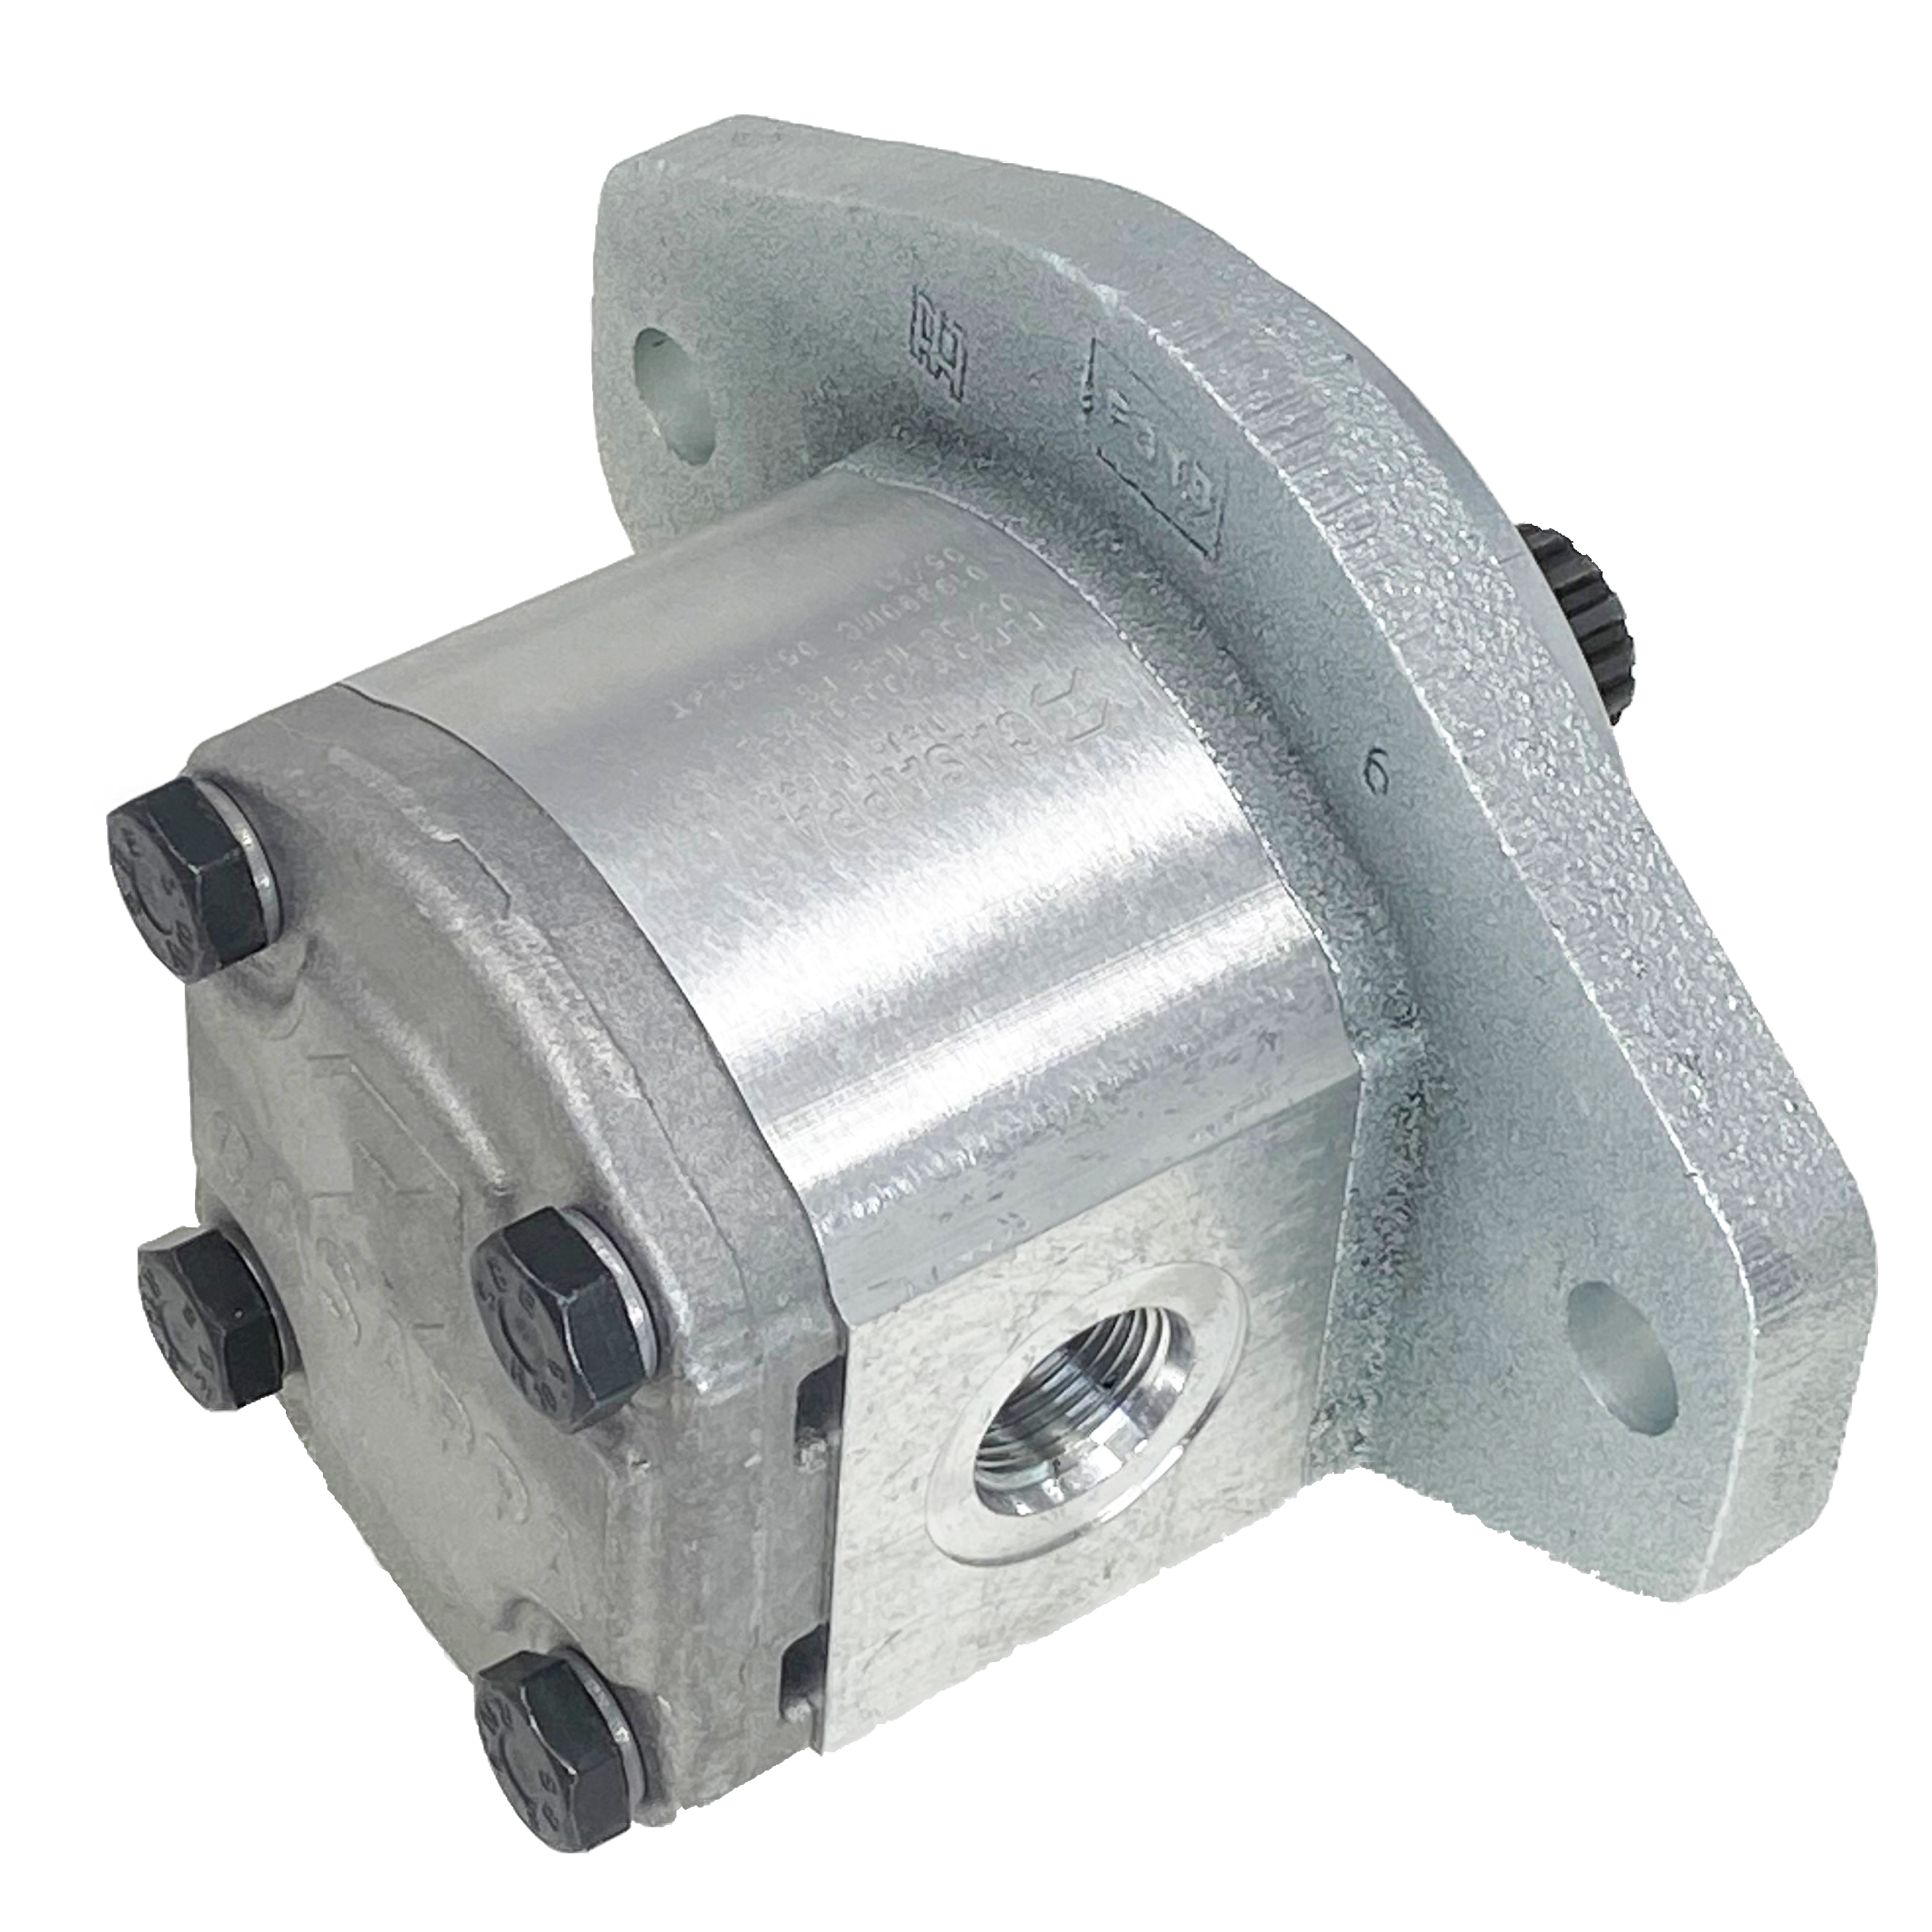 PLM20.8R0-04S5-LOC/OC-N-L : Casappa Polaris Gear Motor, 8.26cc, 3625psi Rated, 3500RPM, Reversible Rear External Drain, 13T 16/32dp Shaft, SAE B 2-Bolt Flange, 0.625 (5/8") #10 SAE Inlet, 0.625 (5/8") #10 SAE Outlet, Aluminum Body, Cast Iron Flange